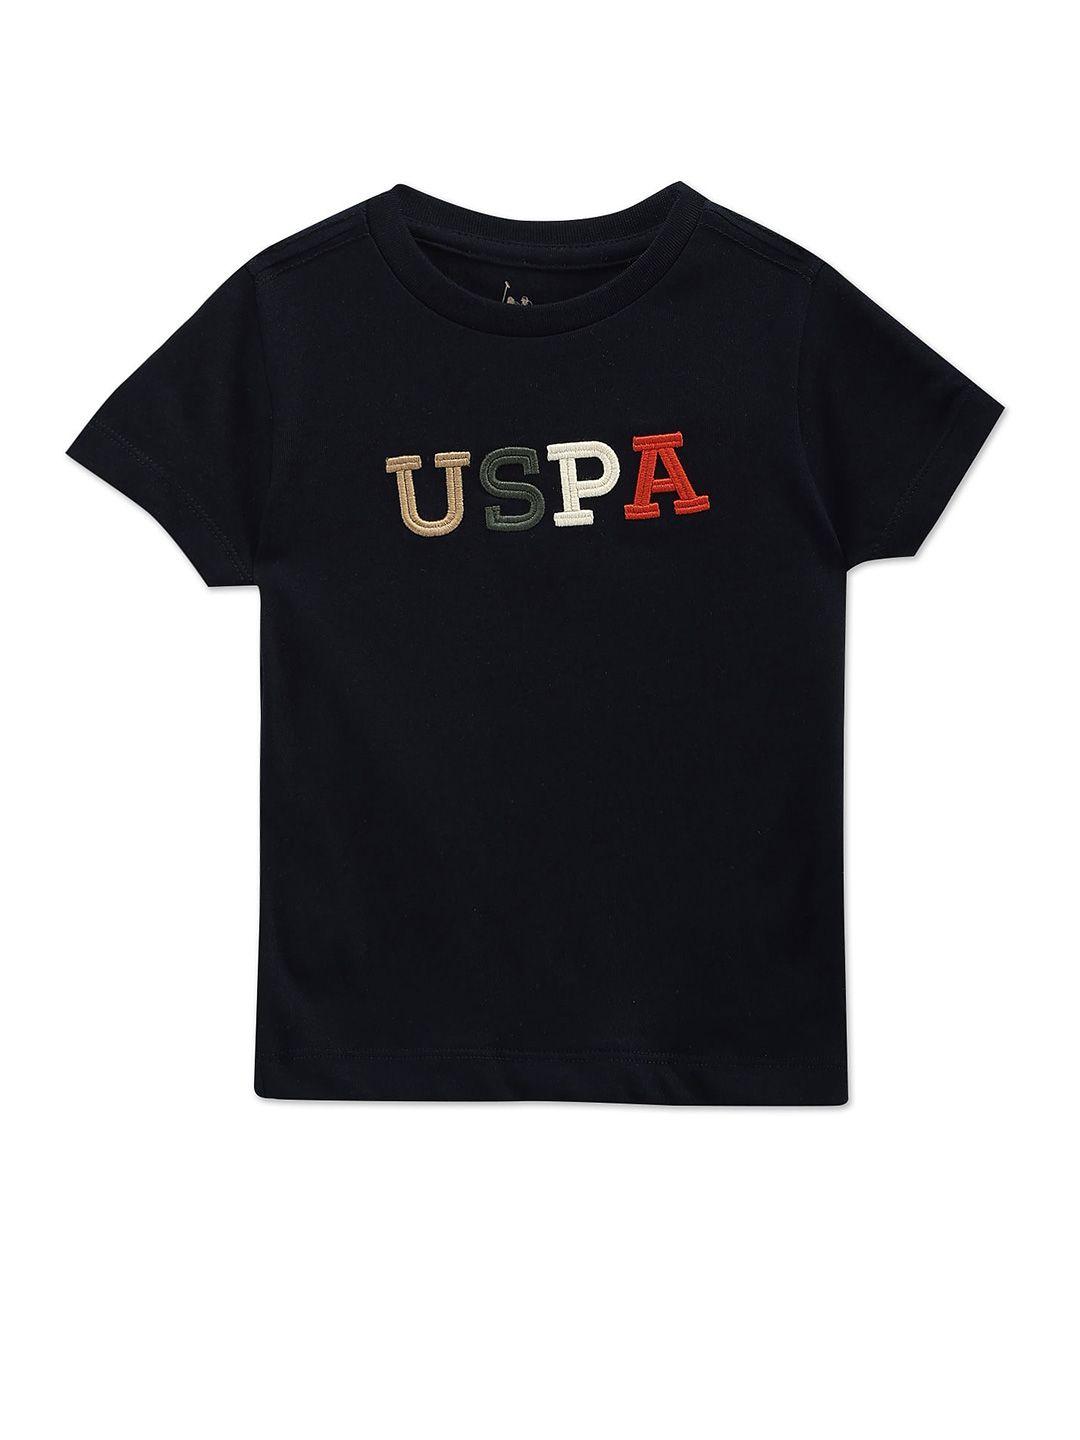 u.s. polo assn. kids boys typography printed cotton t-shirt